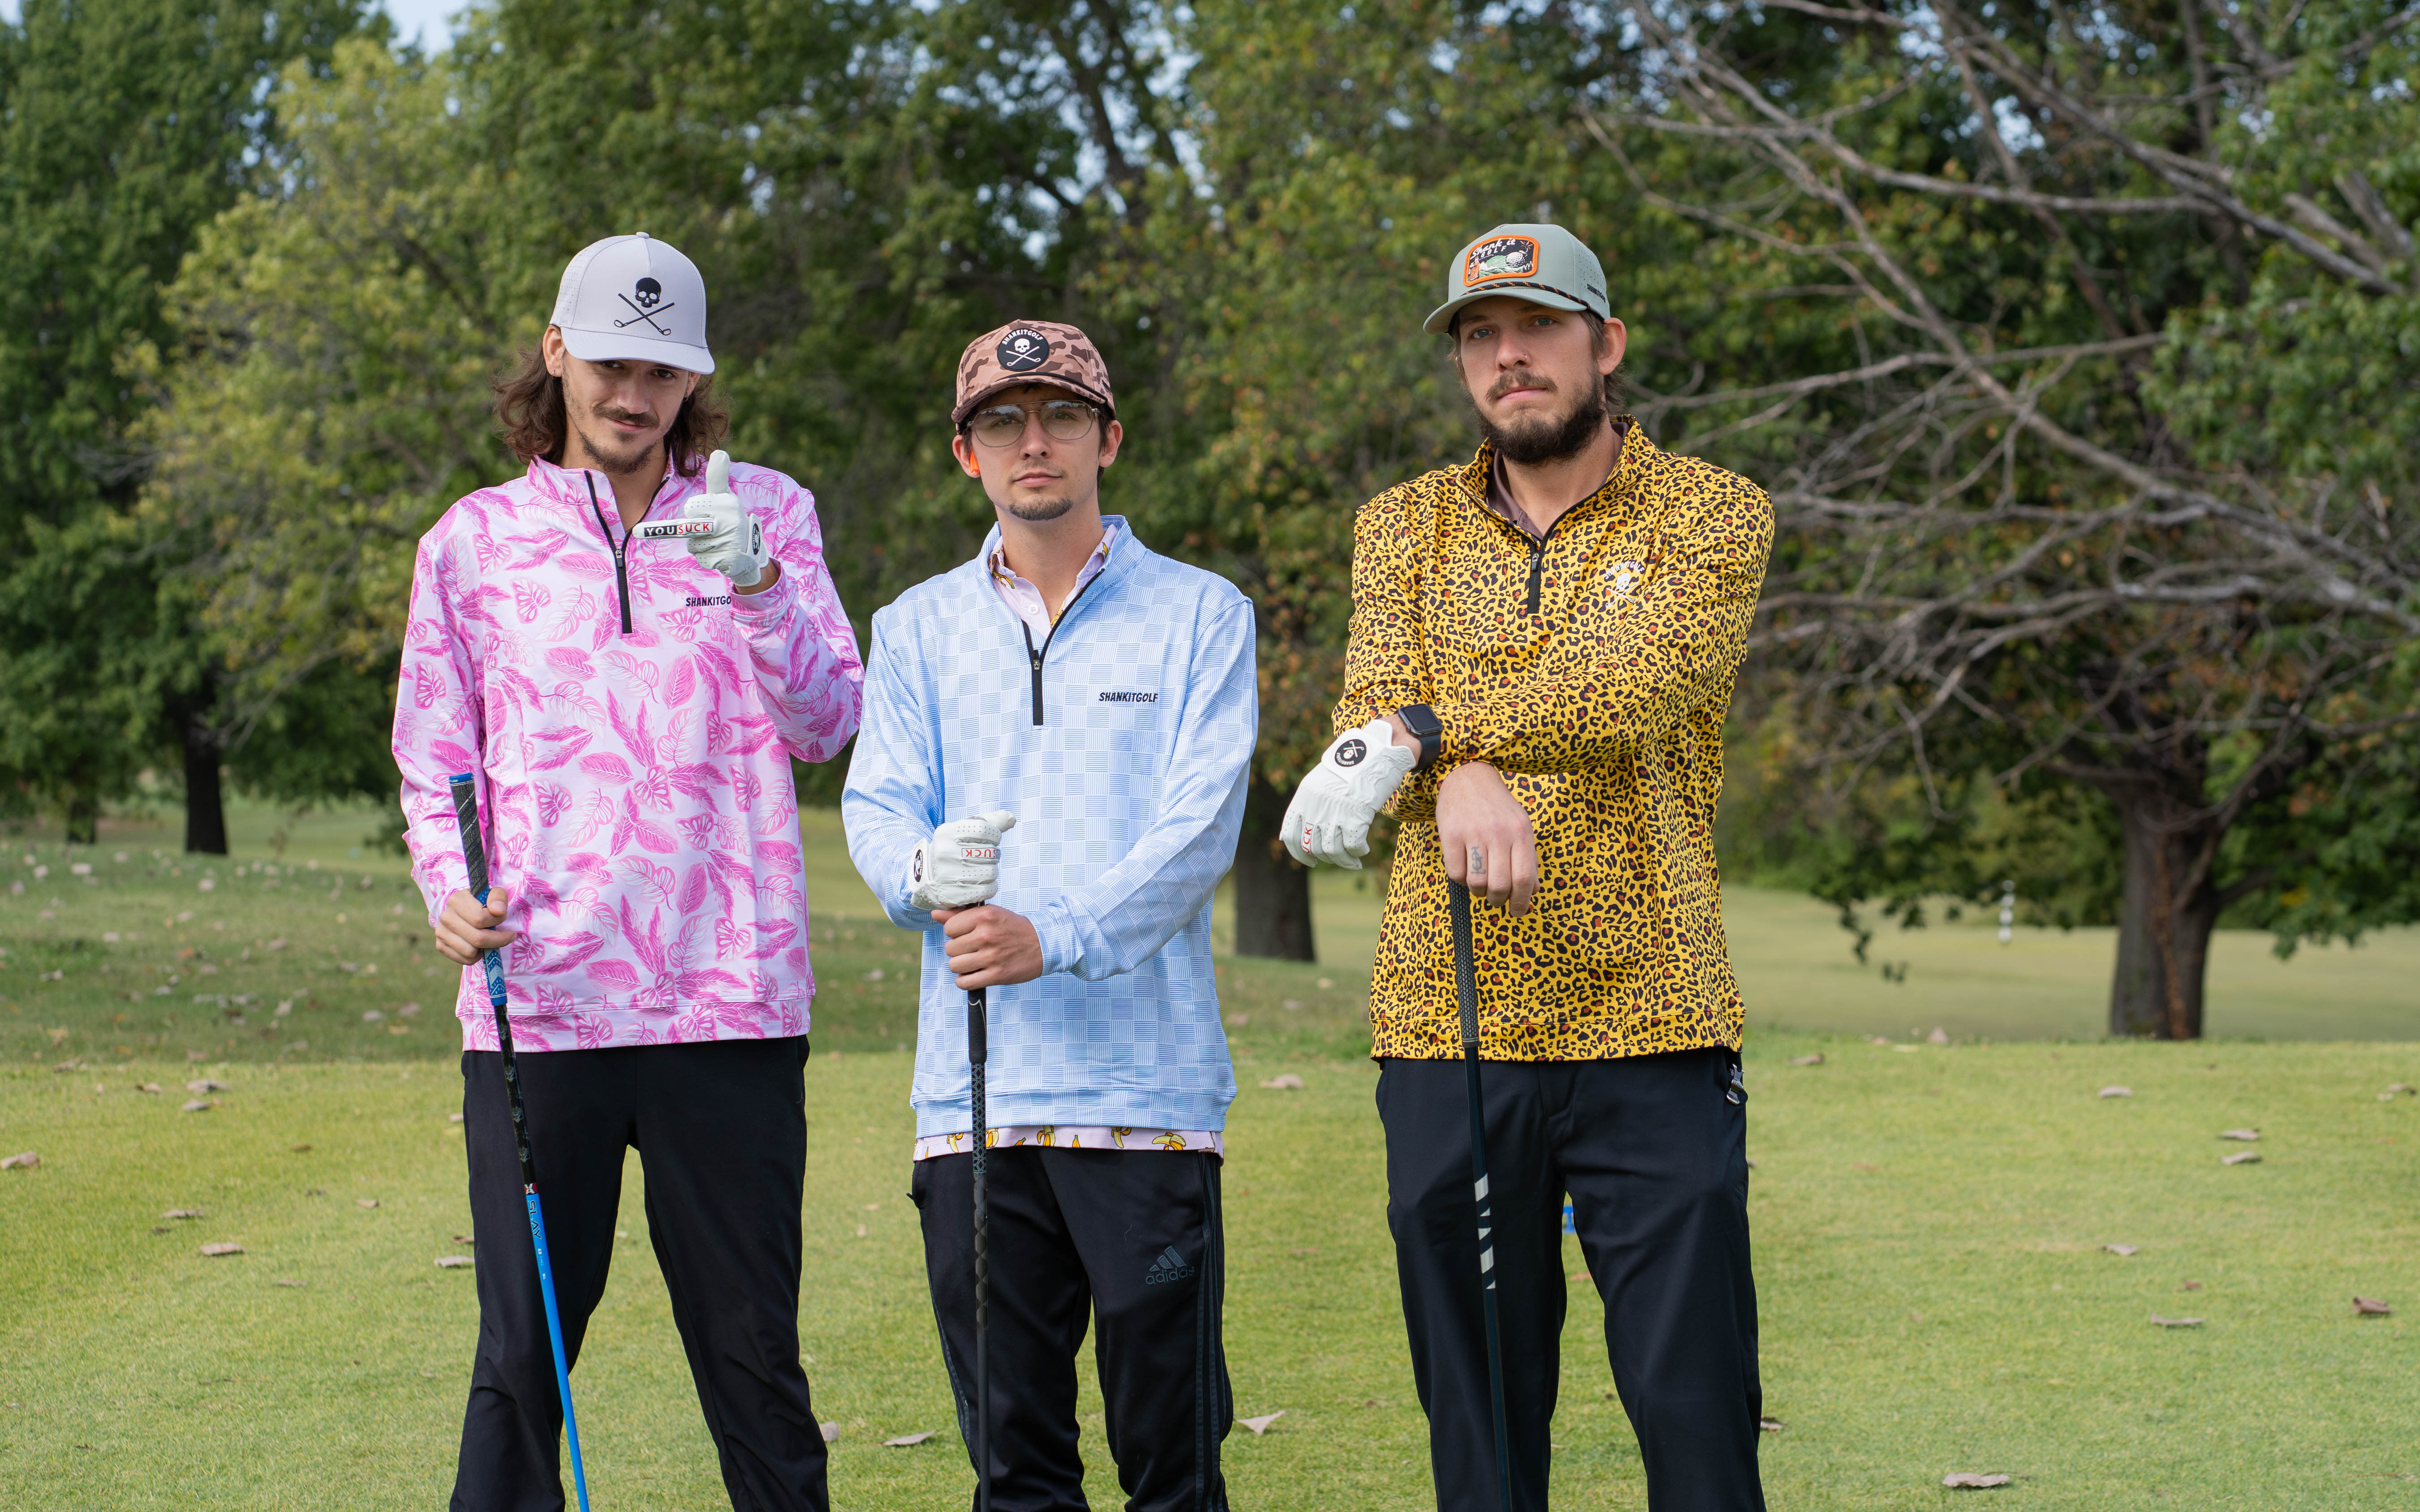 Shankit Golf Tees Up Success with RepSpark Partnership